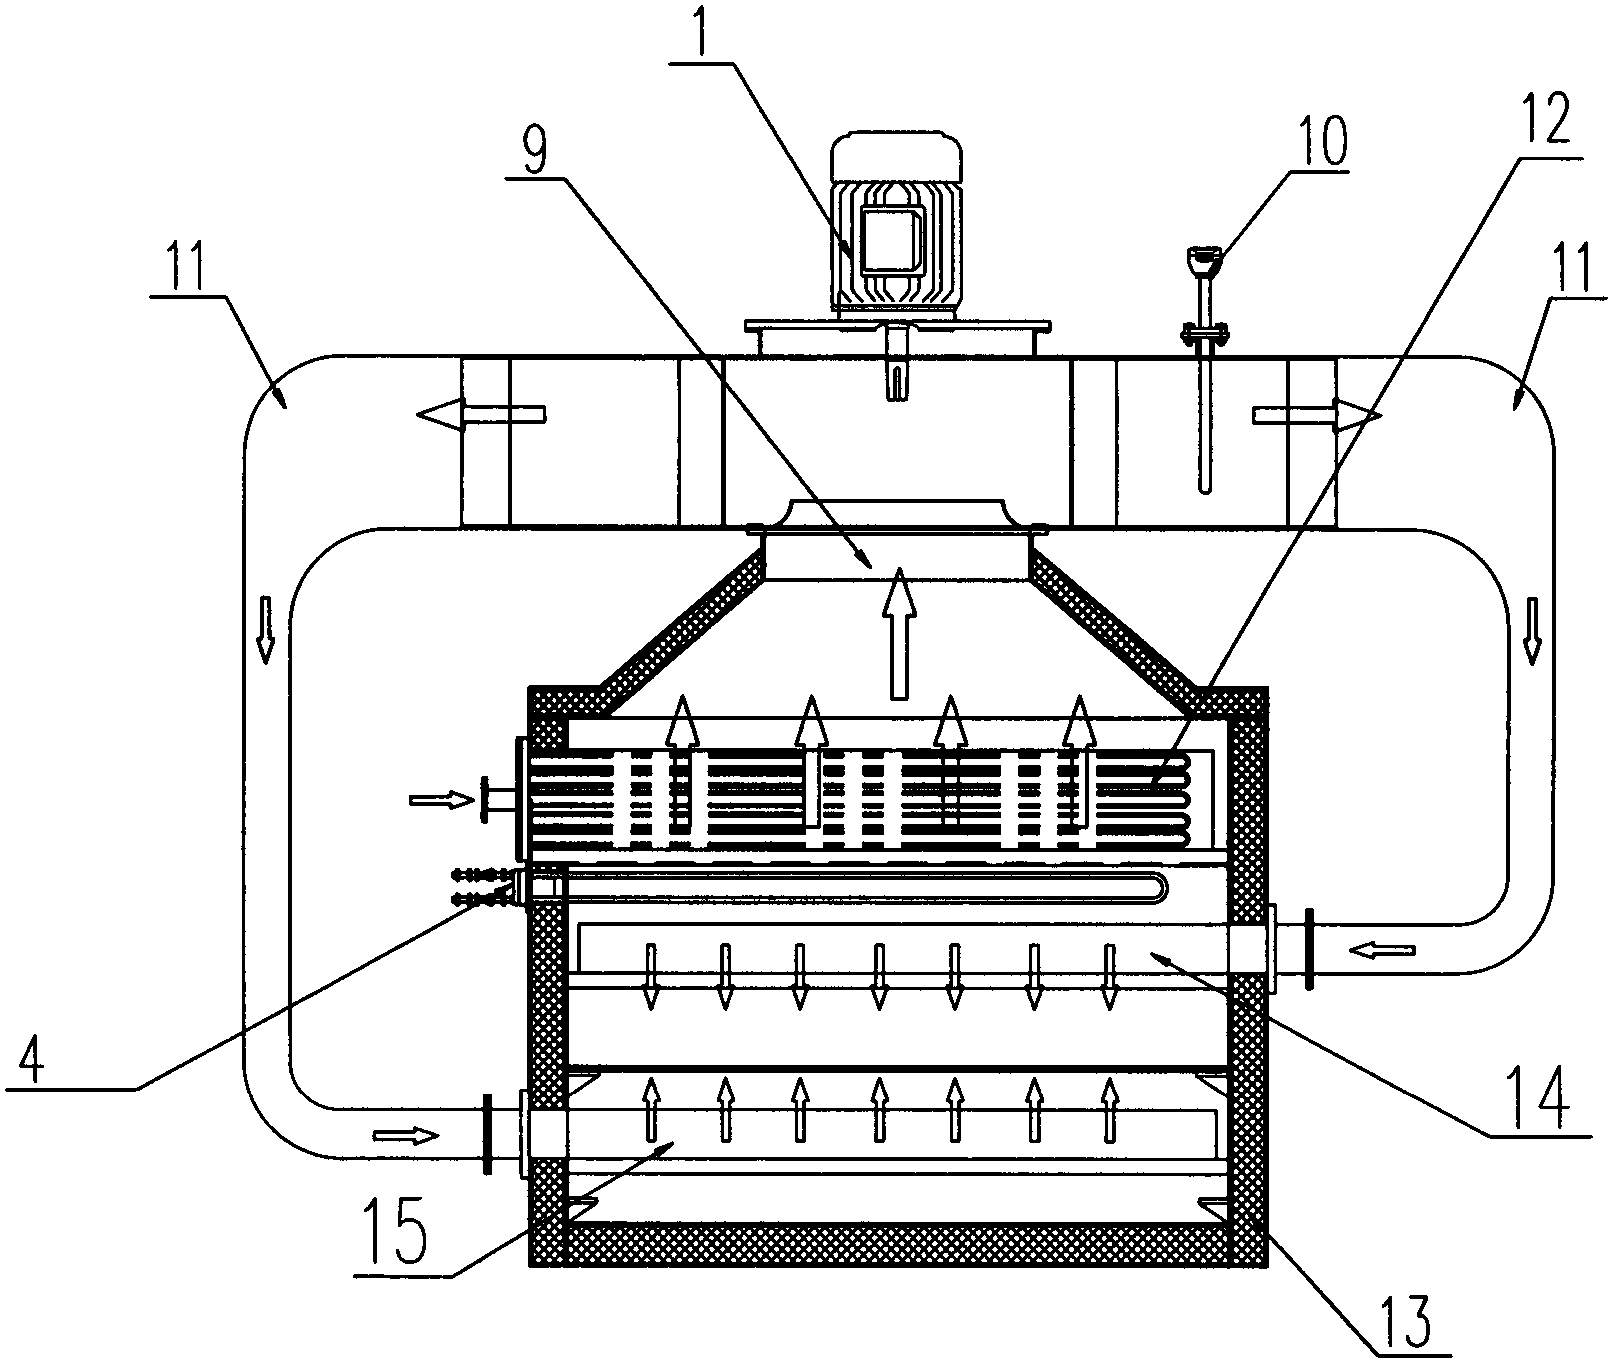 Internal circulating air cooling device